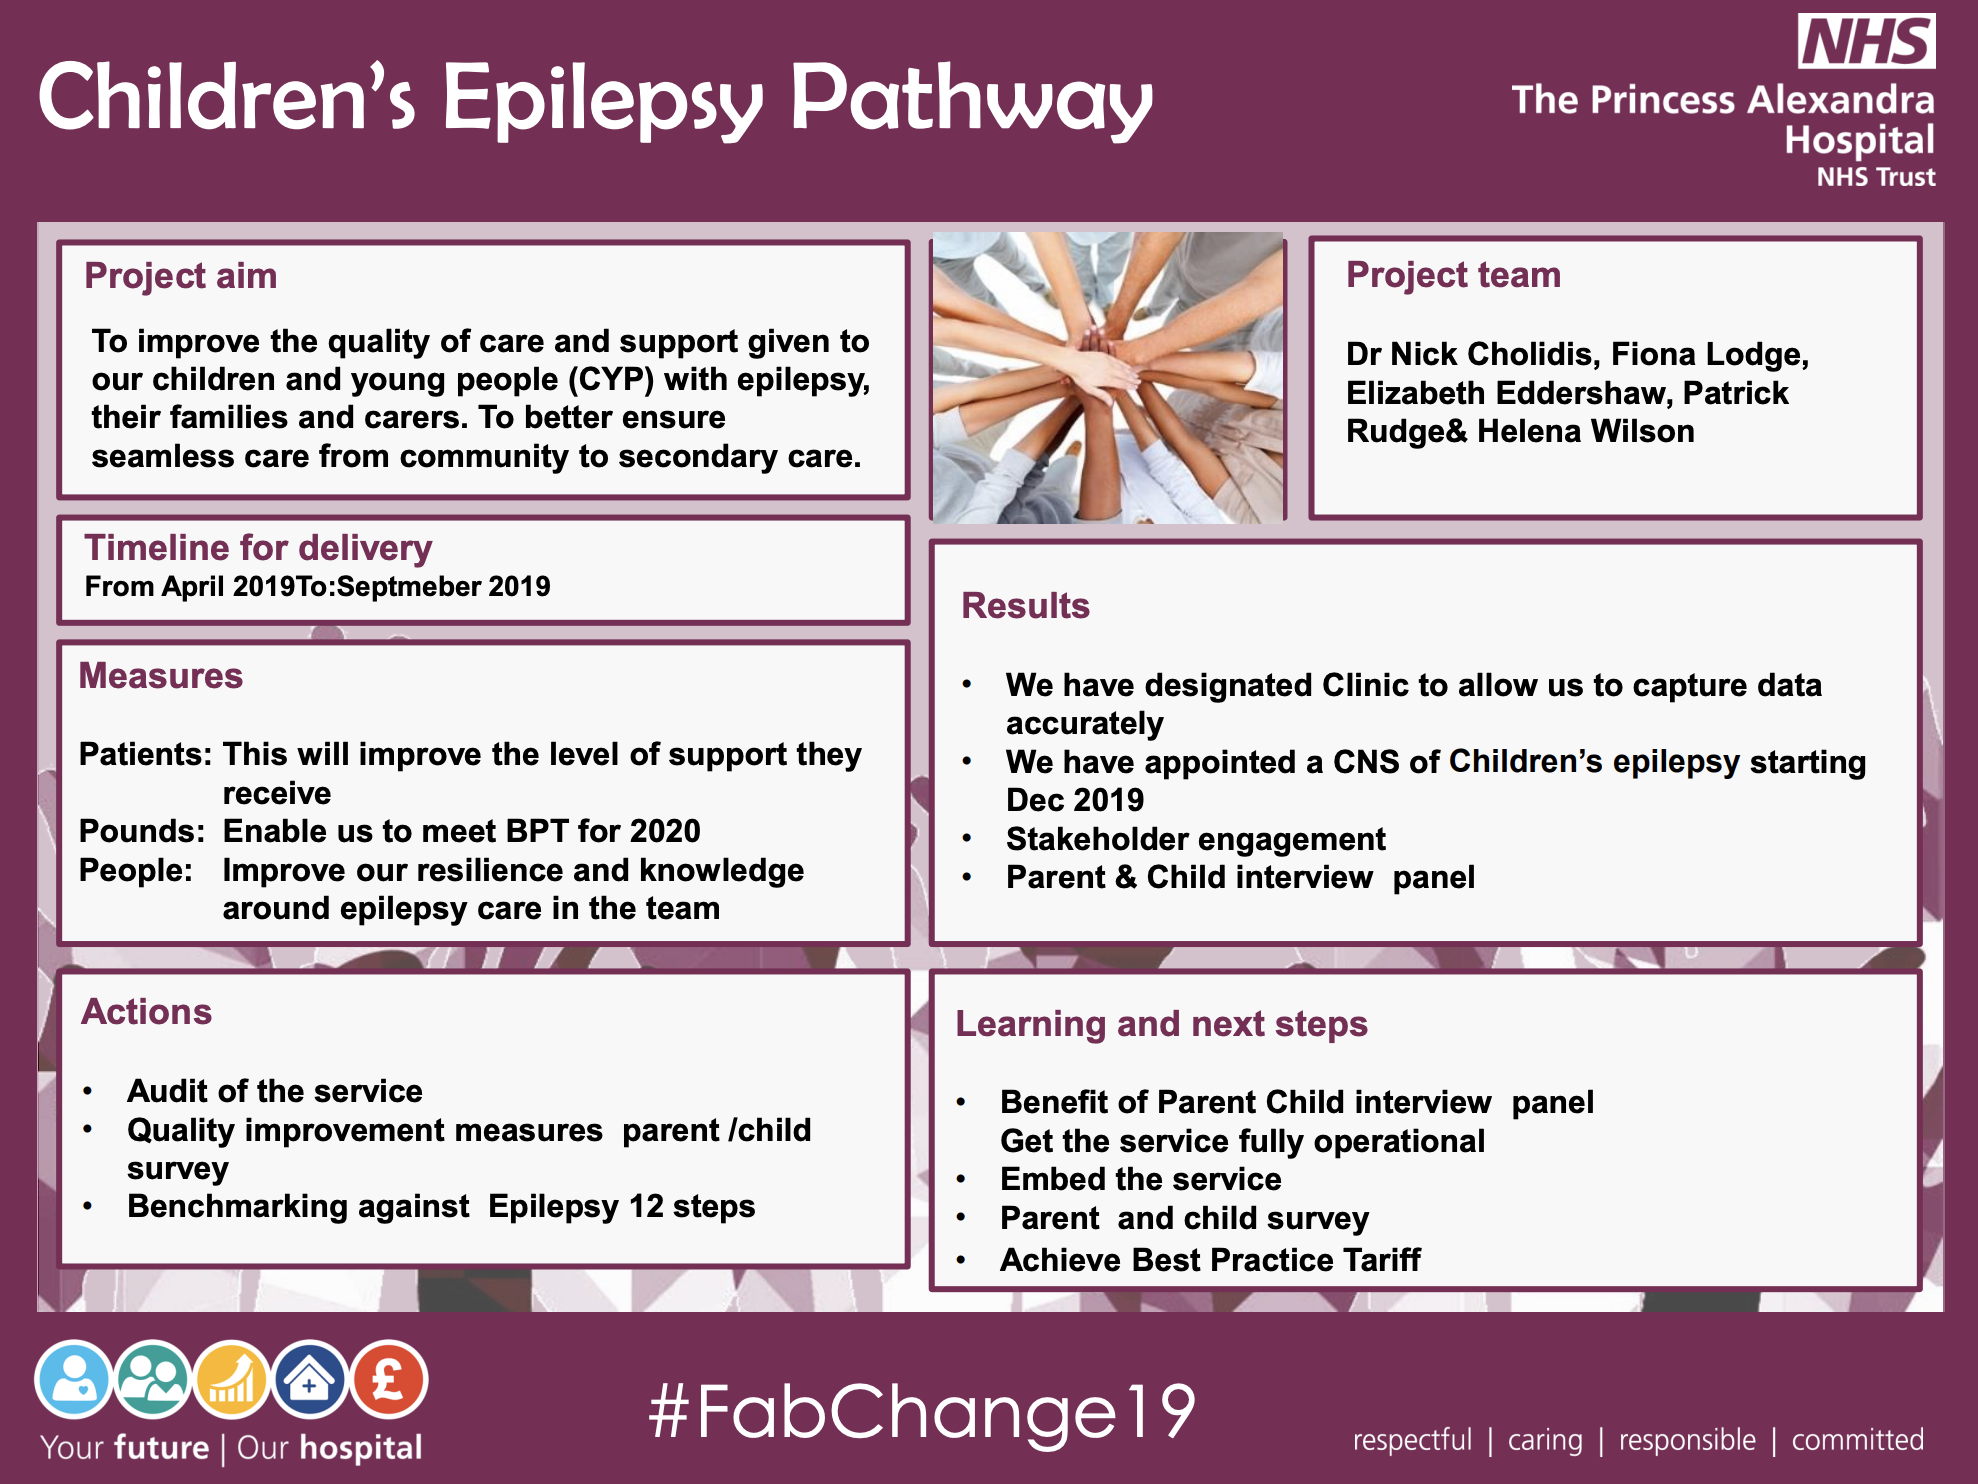 Children's Epilepsy Pathway - @QualityFirstPAH featured image